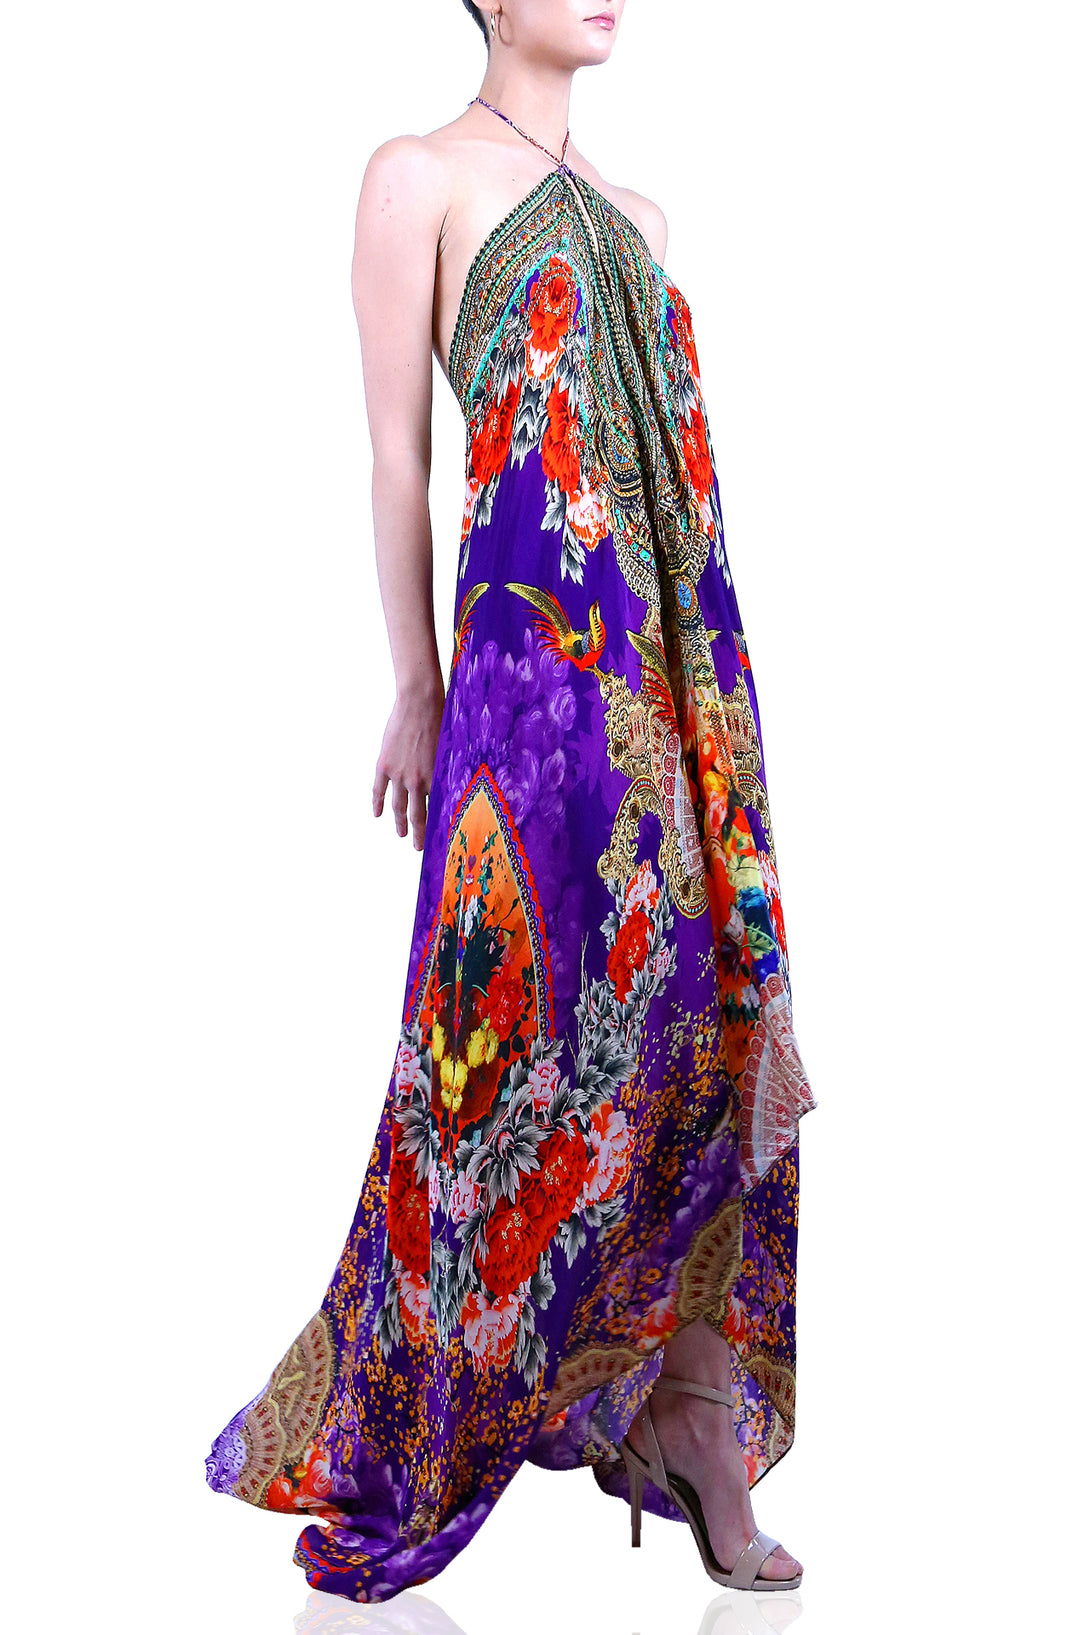  dark purple dress prom, formal dresses for women, Shahida Parides, plunging neckline cocktail dress,